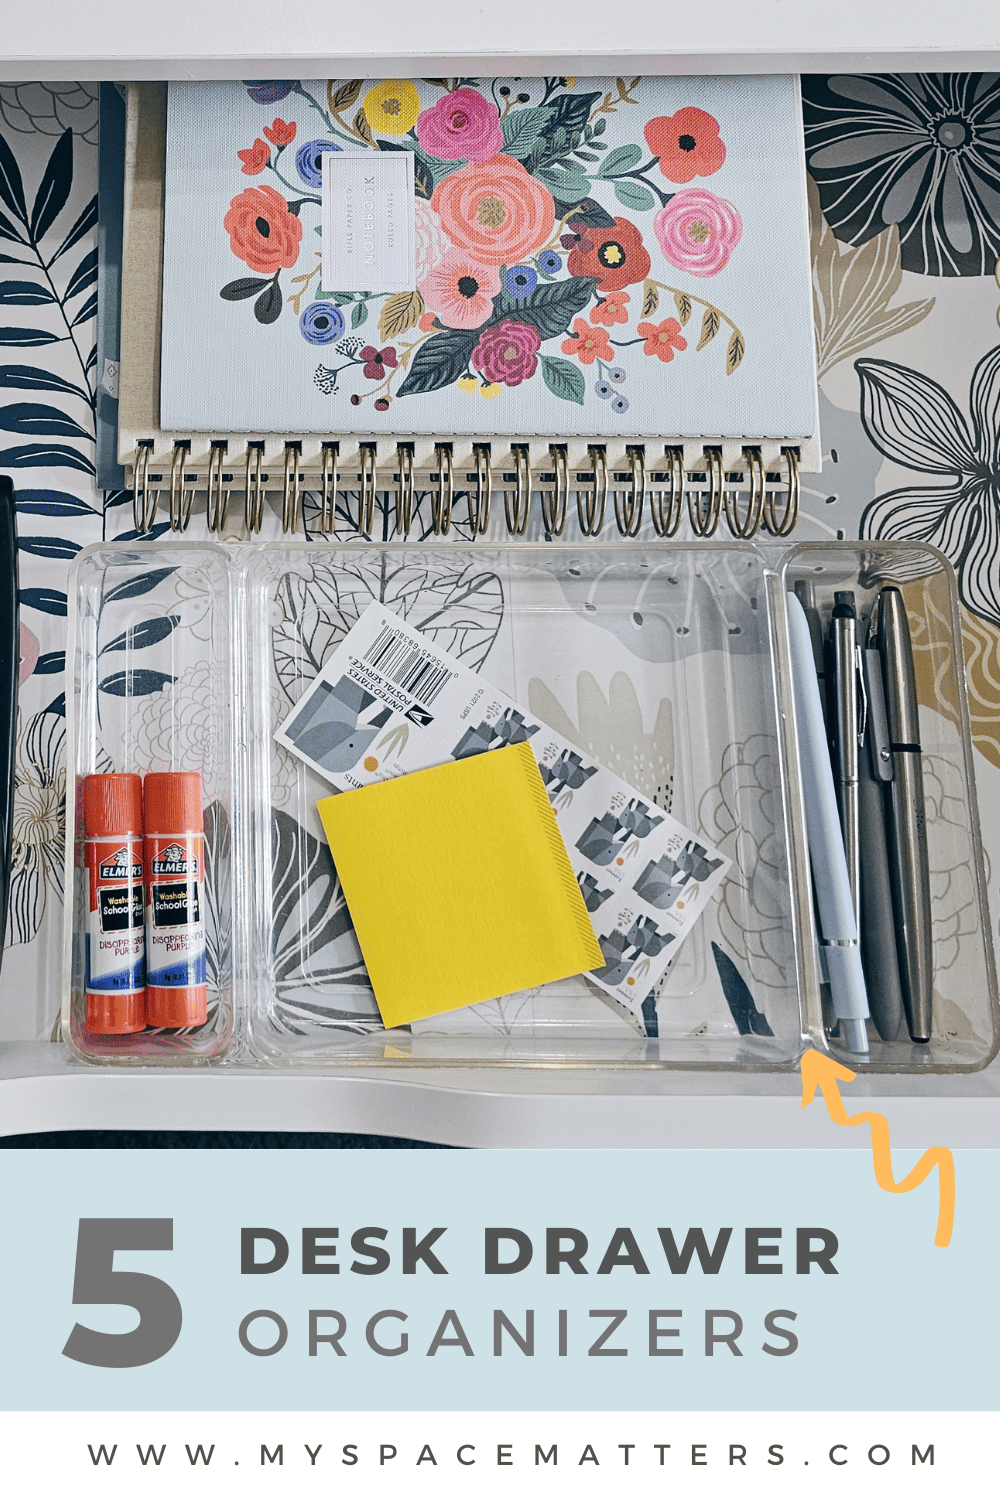 organize desk drawers<br>
